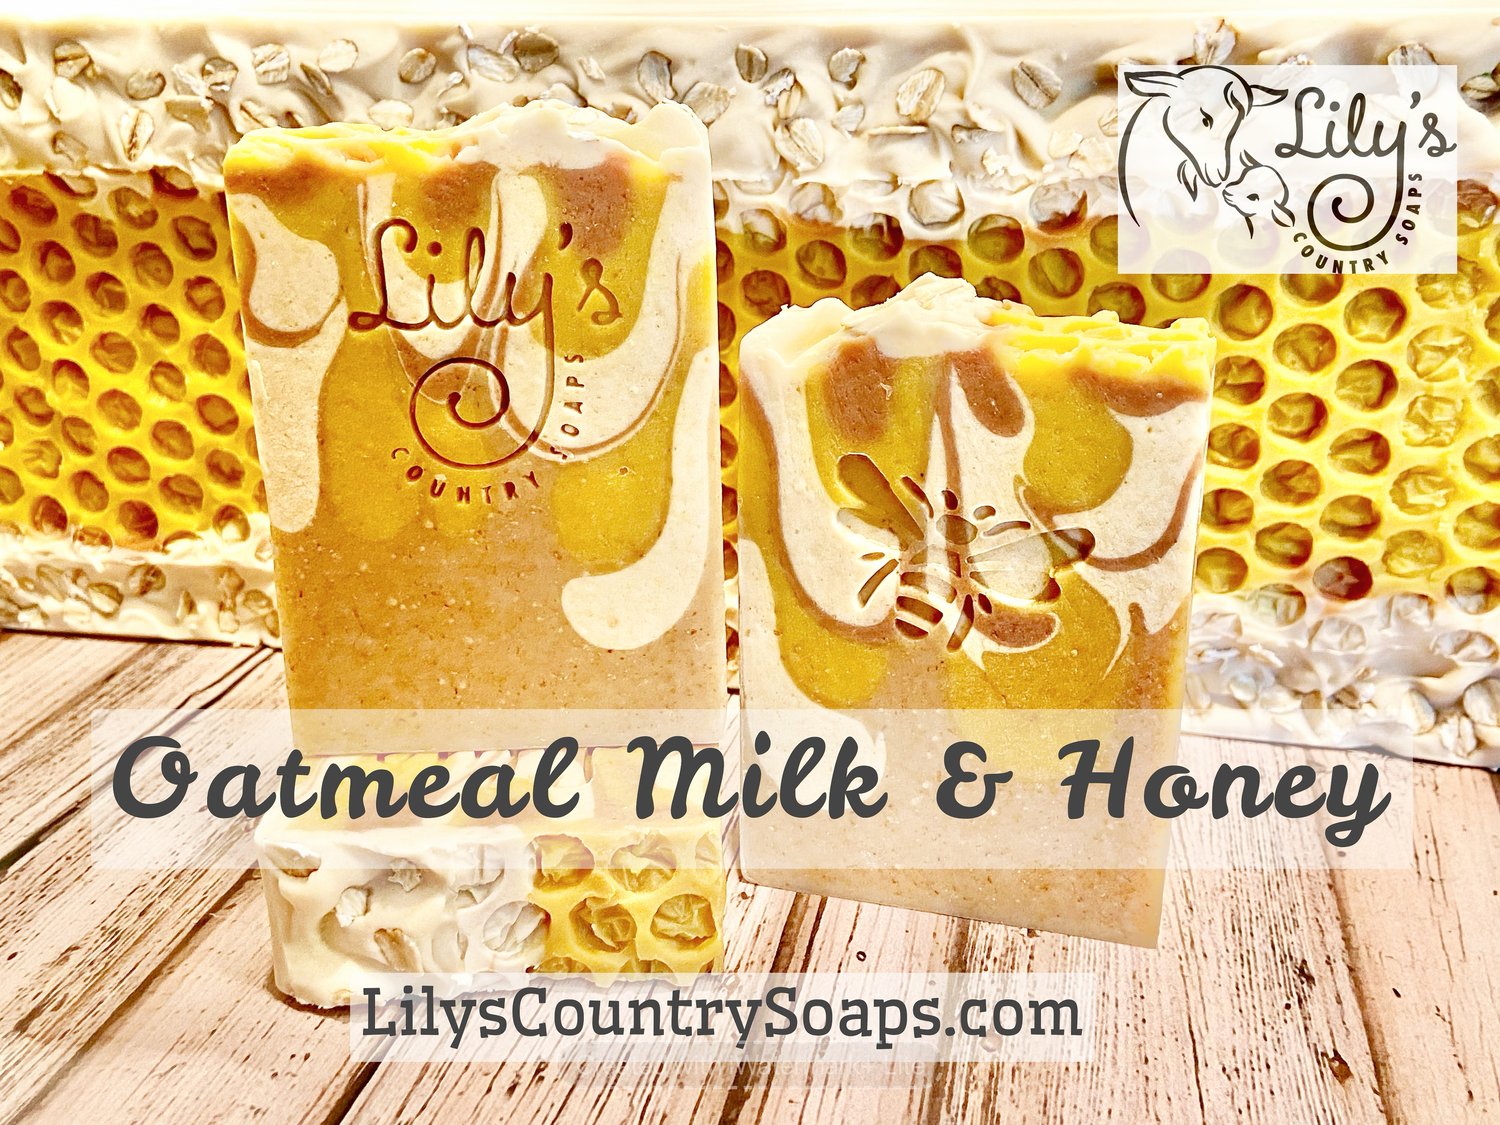 Milk and Honey Soap